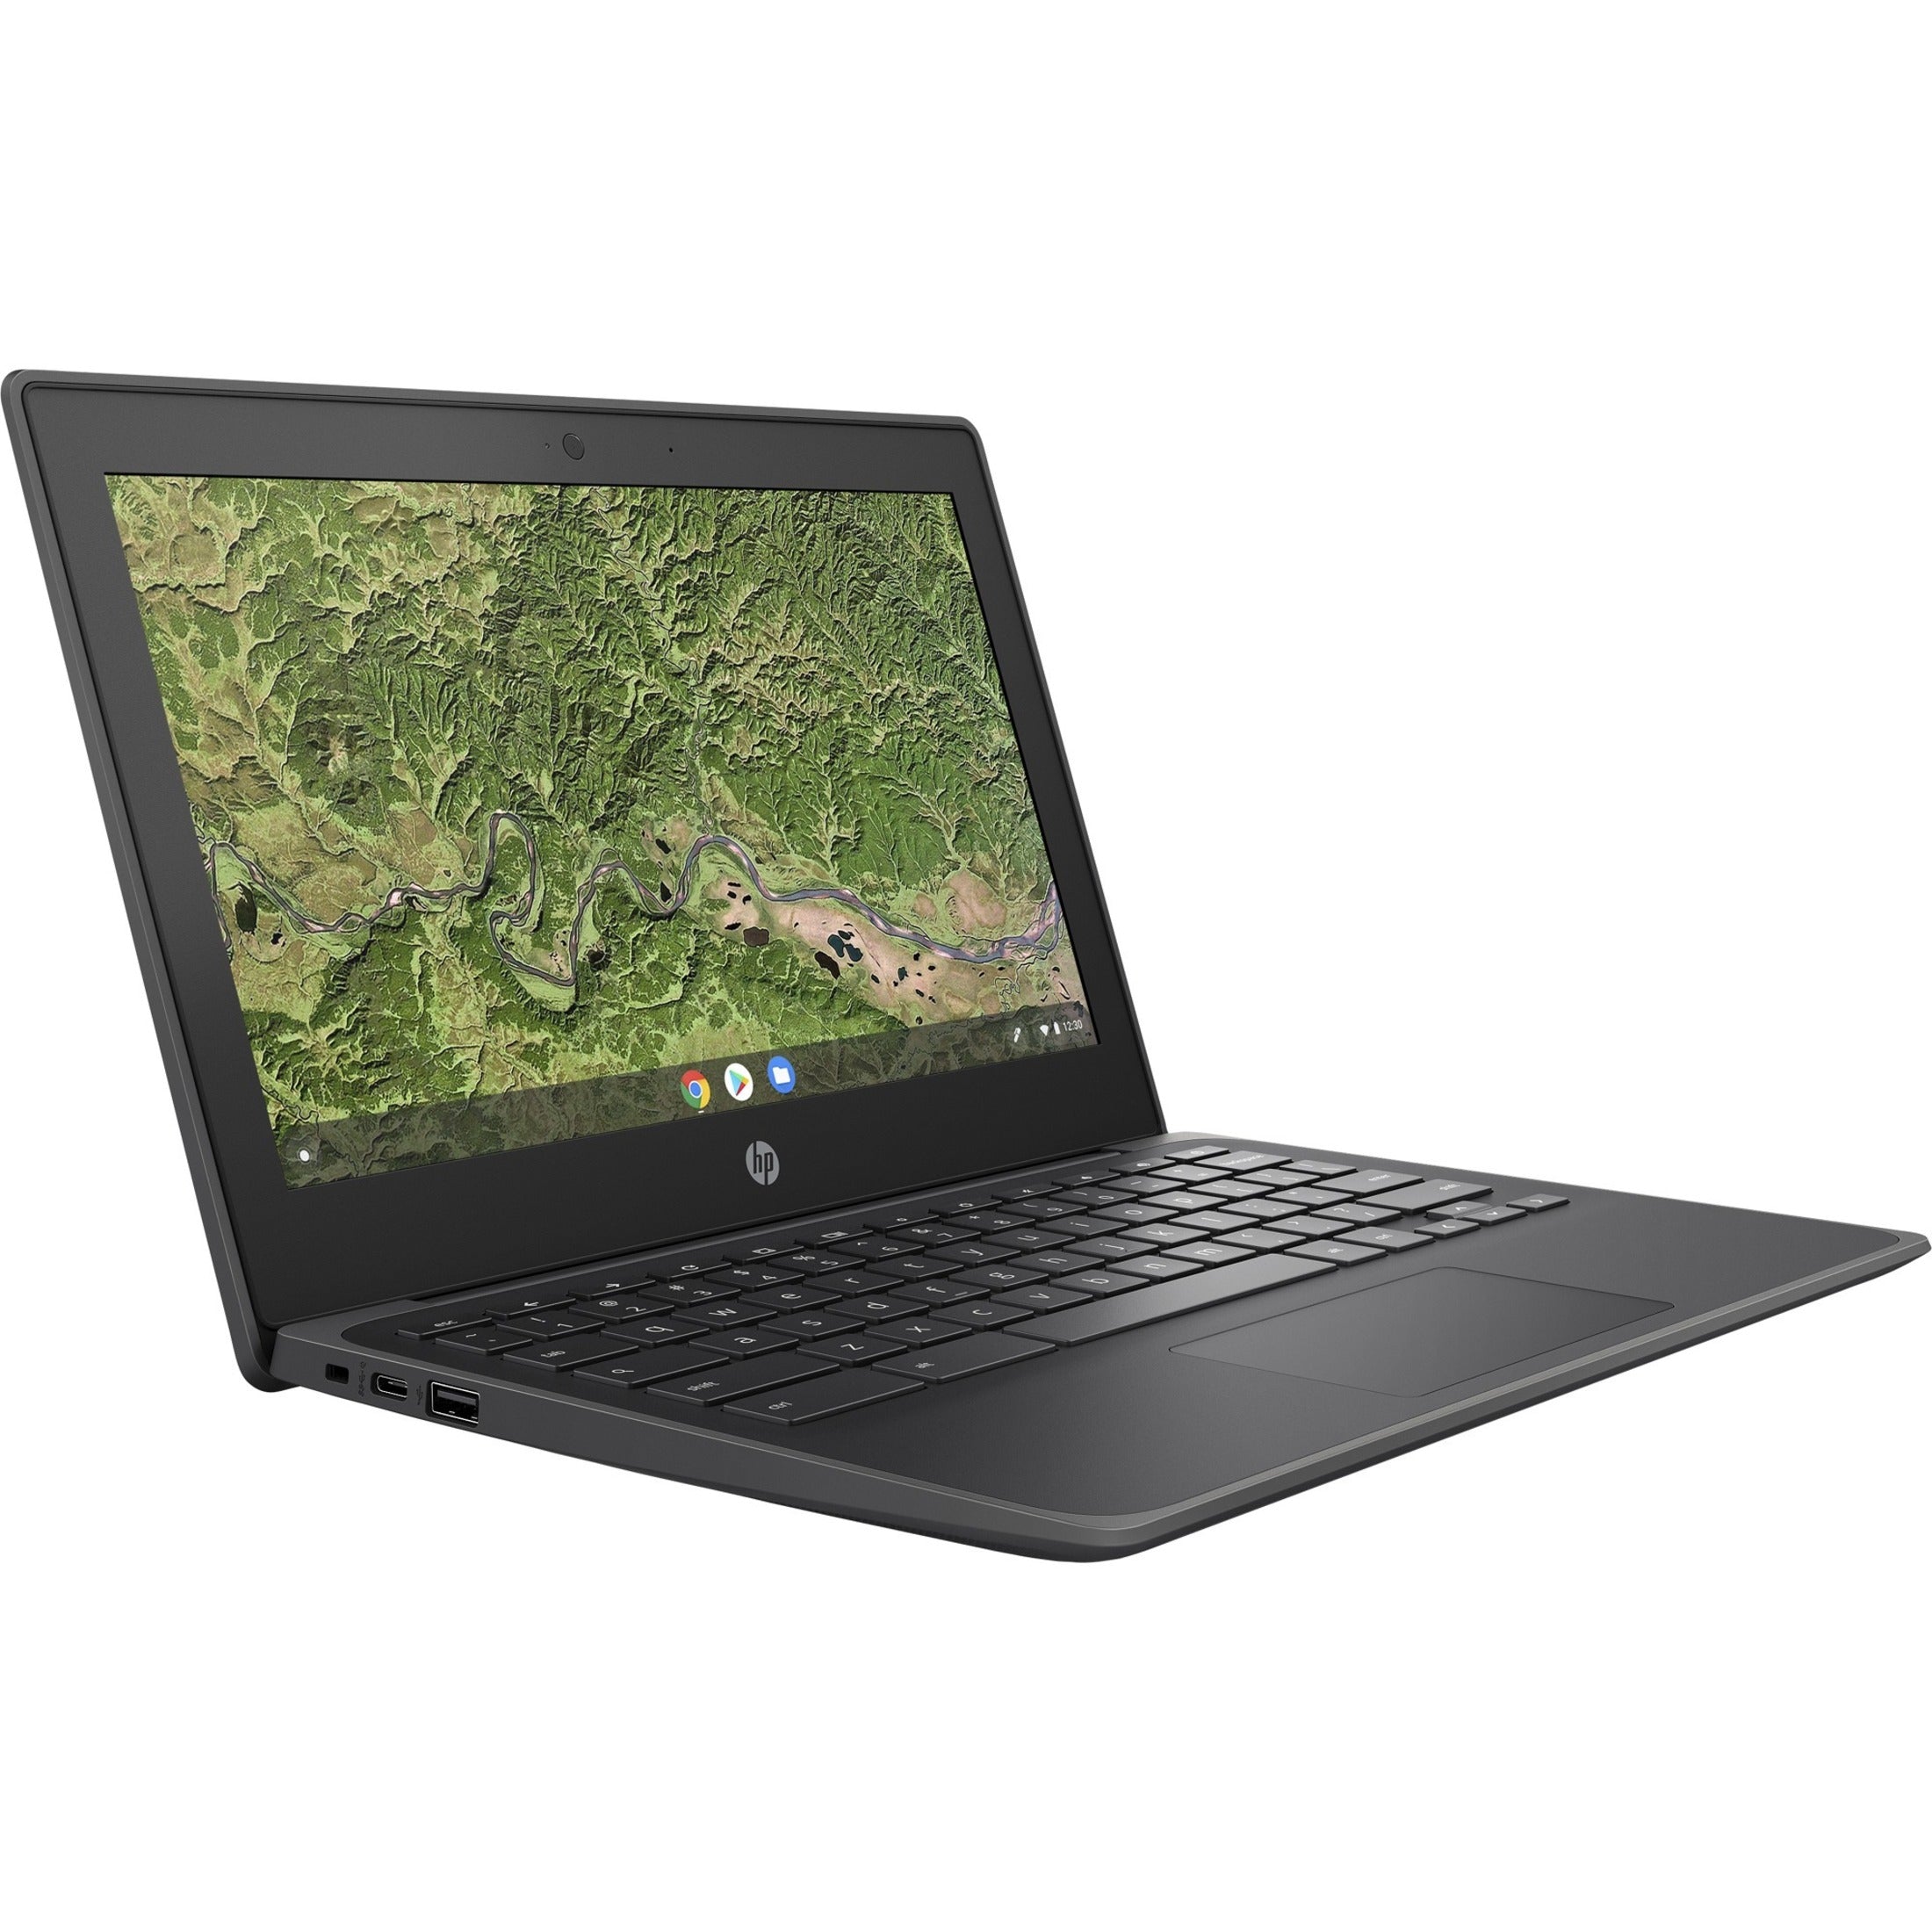 HPI SOURCING - NEW 436C7UT Chromebook 11A G8 EE 11.6 Chromebook, HD, AMD A4-9120C Dual-core, 4GB RAM, 32GB Flash Memory, Chalkboard Gray